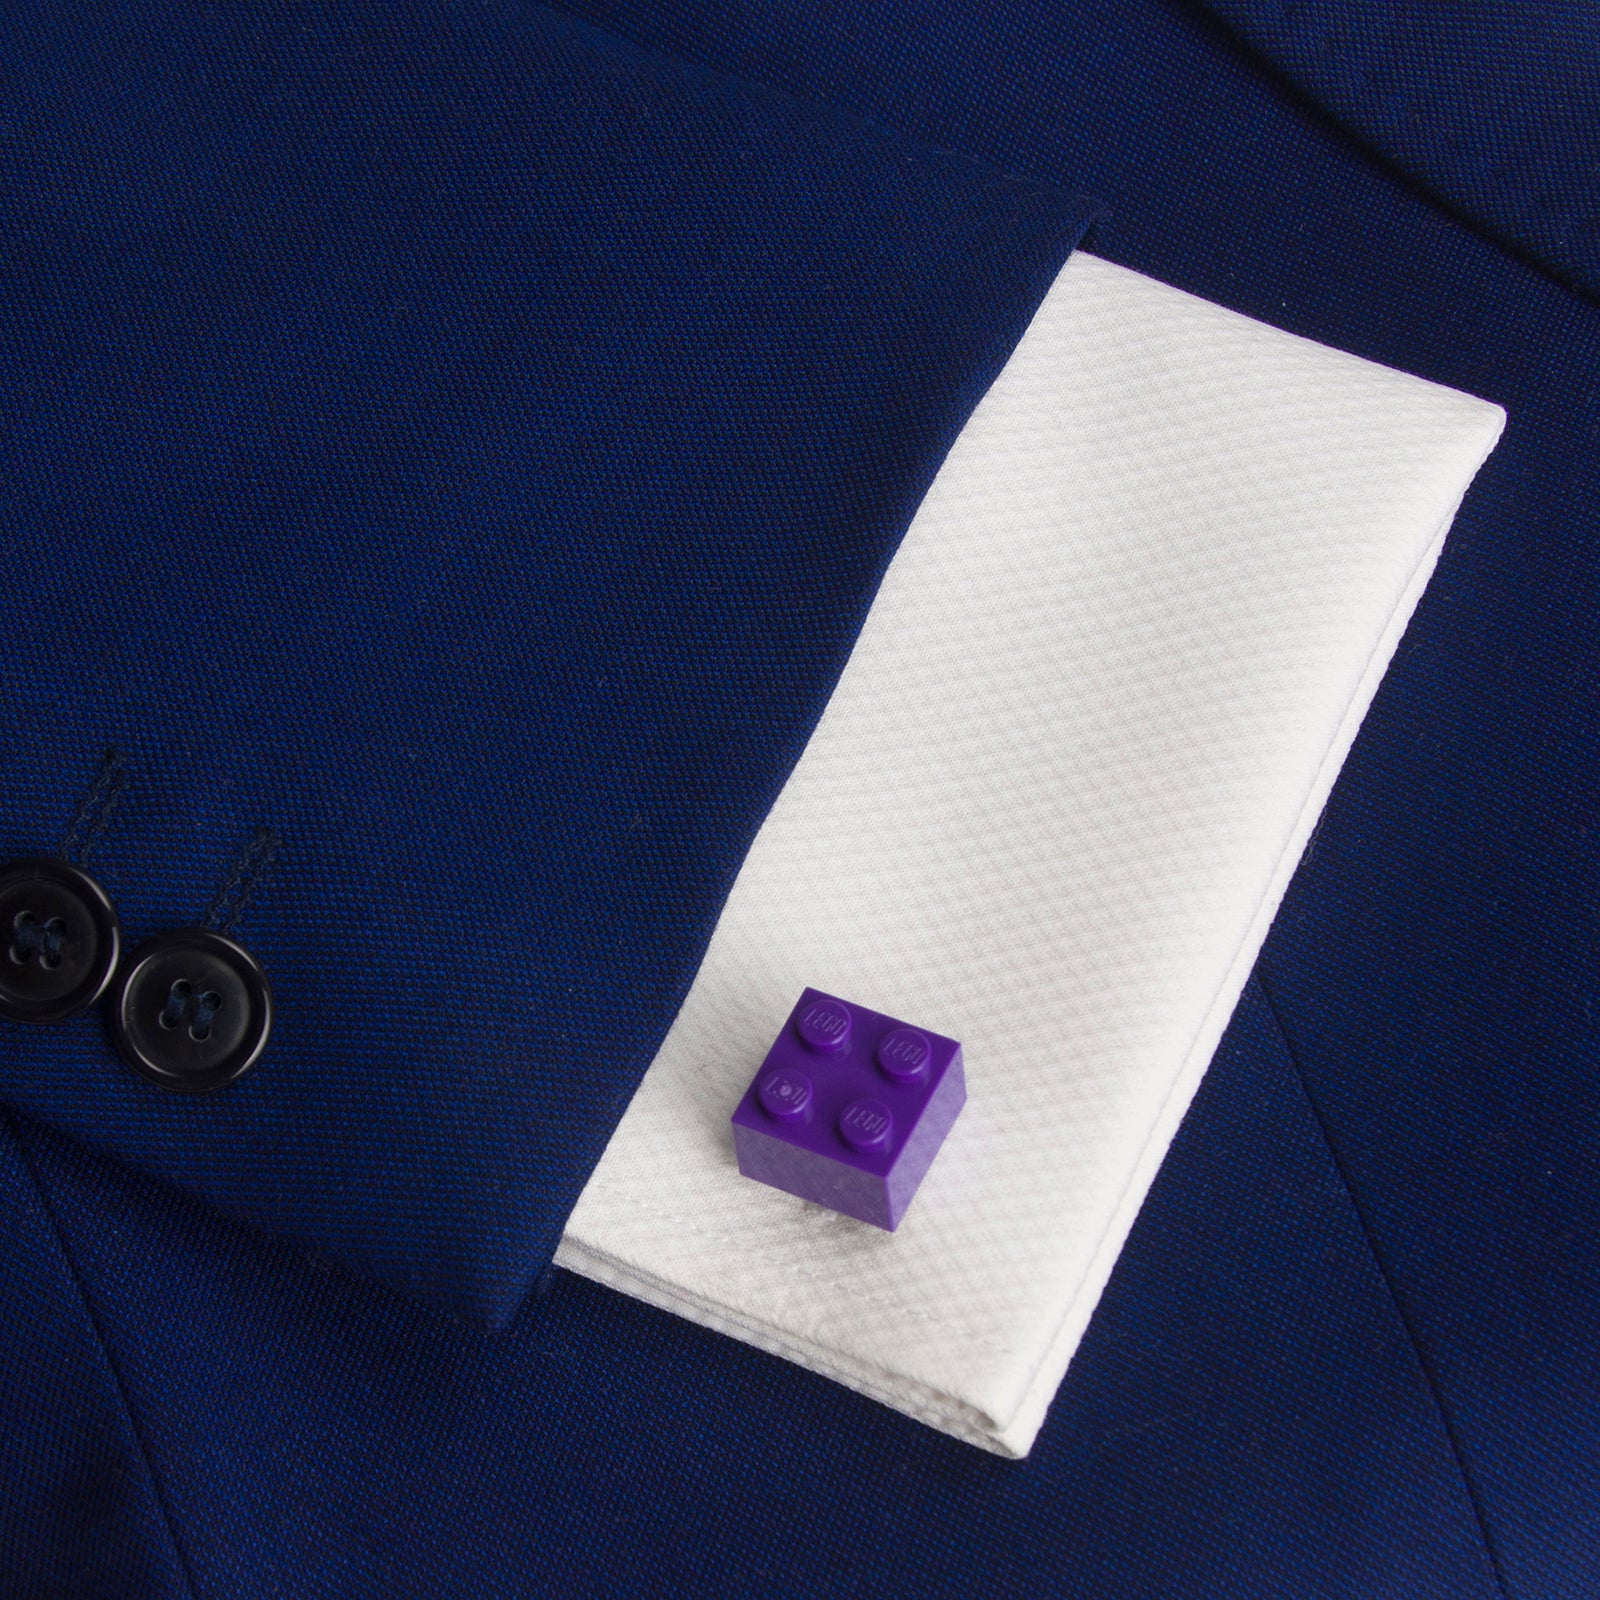 purple cube cufflinks